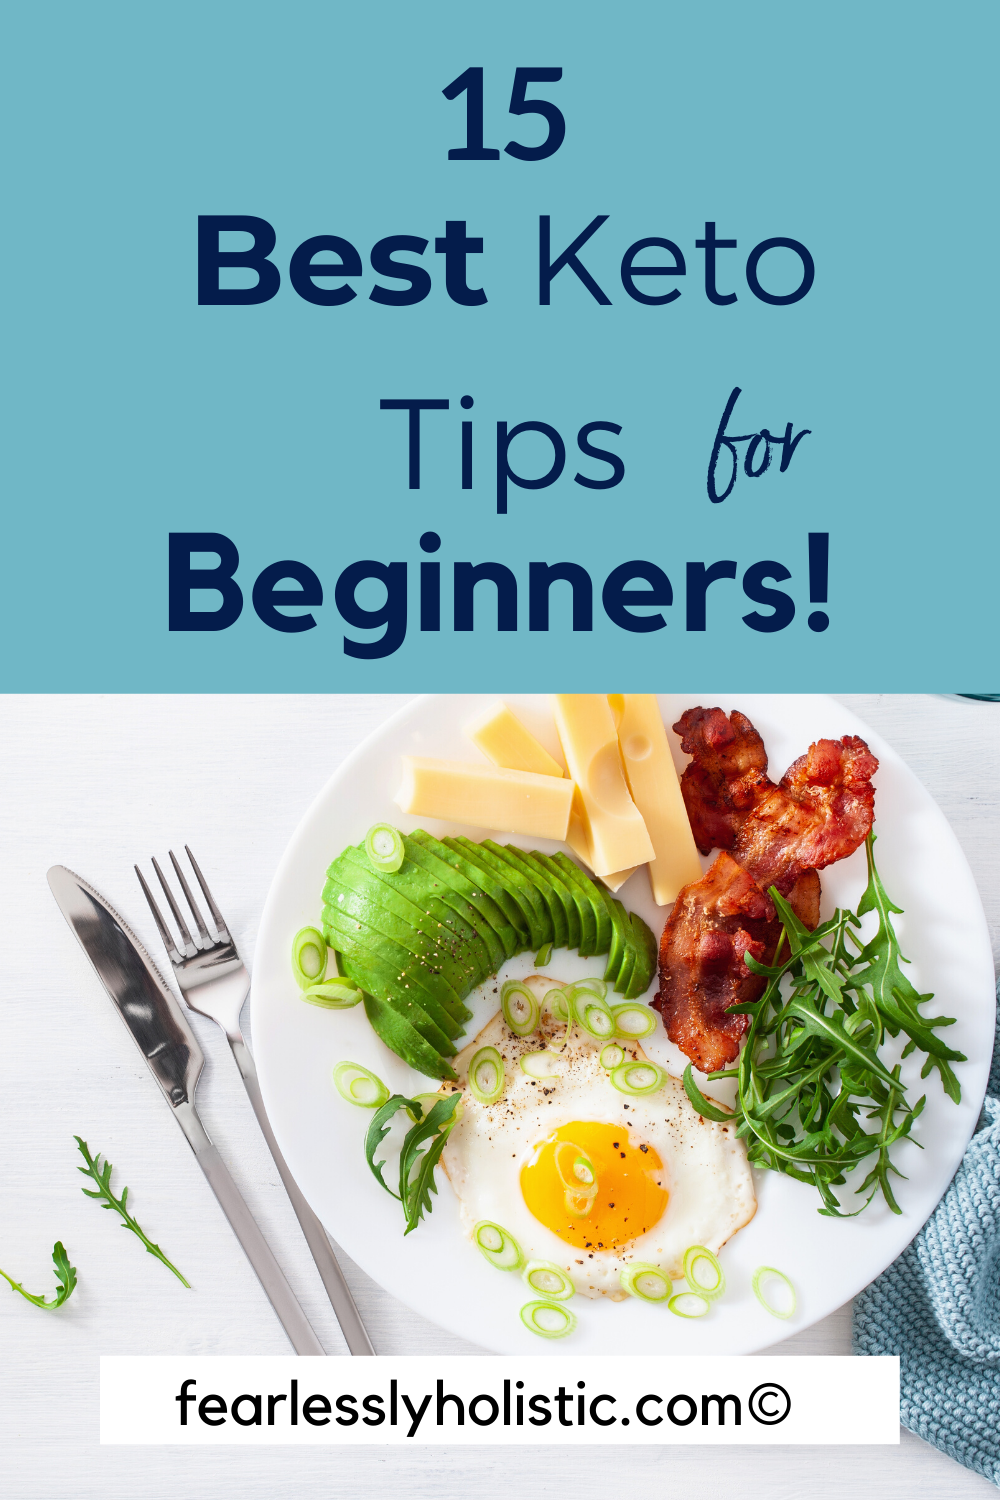 The 15 Best Keto Tips For Beginners